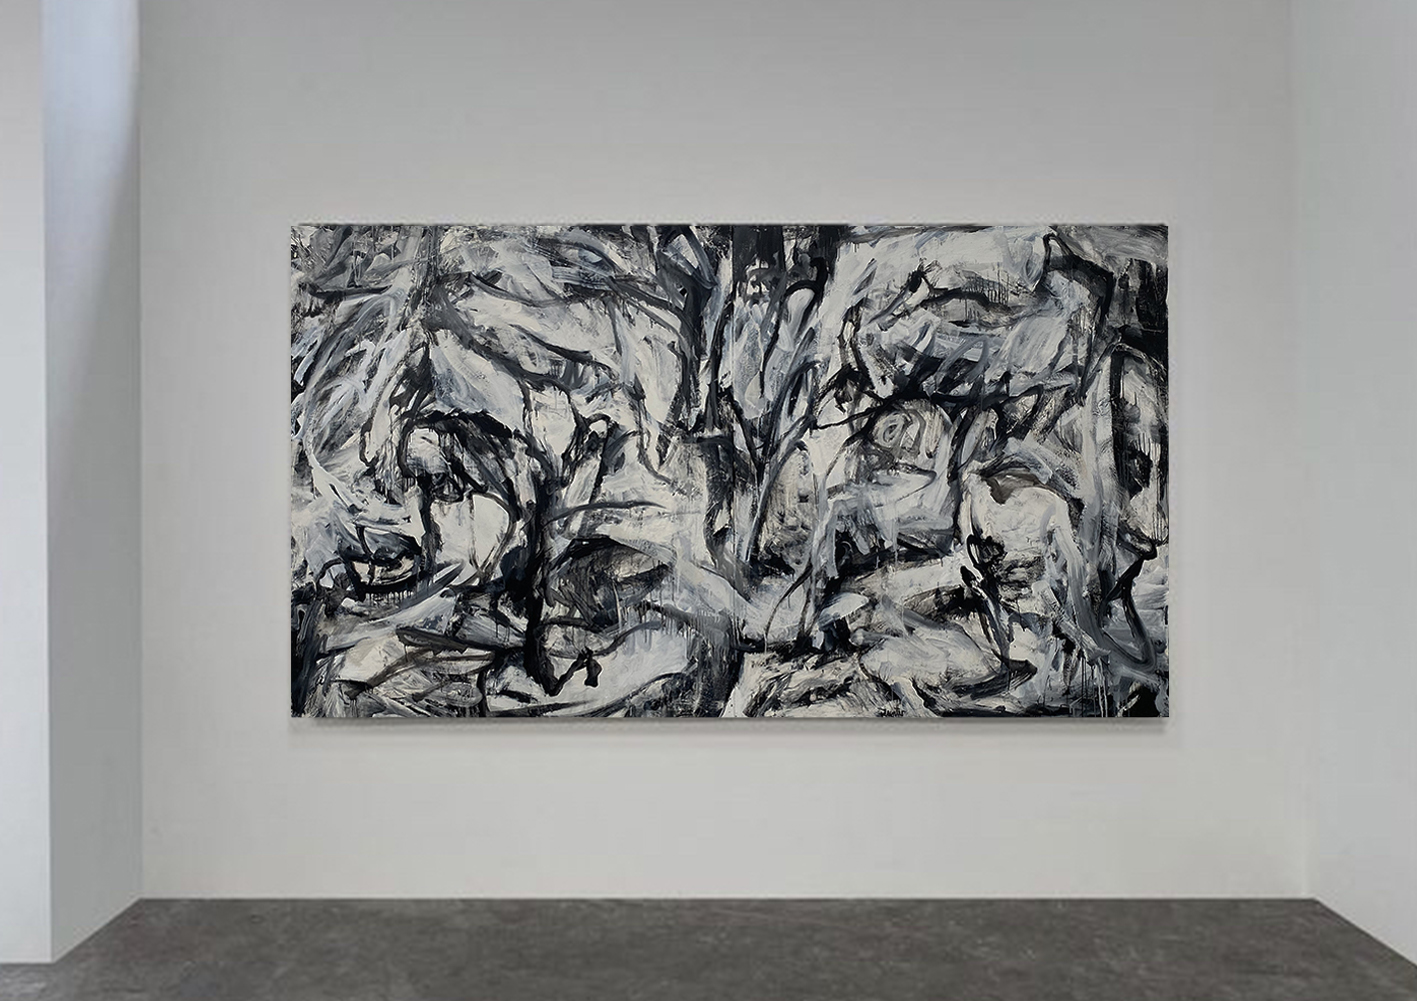 Todd Hunter, Sleepy Head, 2021, Oil on canvas, 183 x 320 cm, Installation View: fox jensen, alexandria, 2021